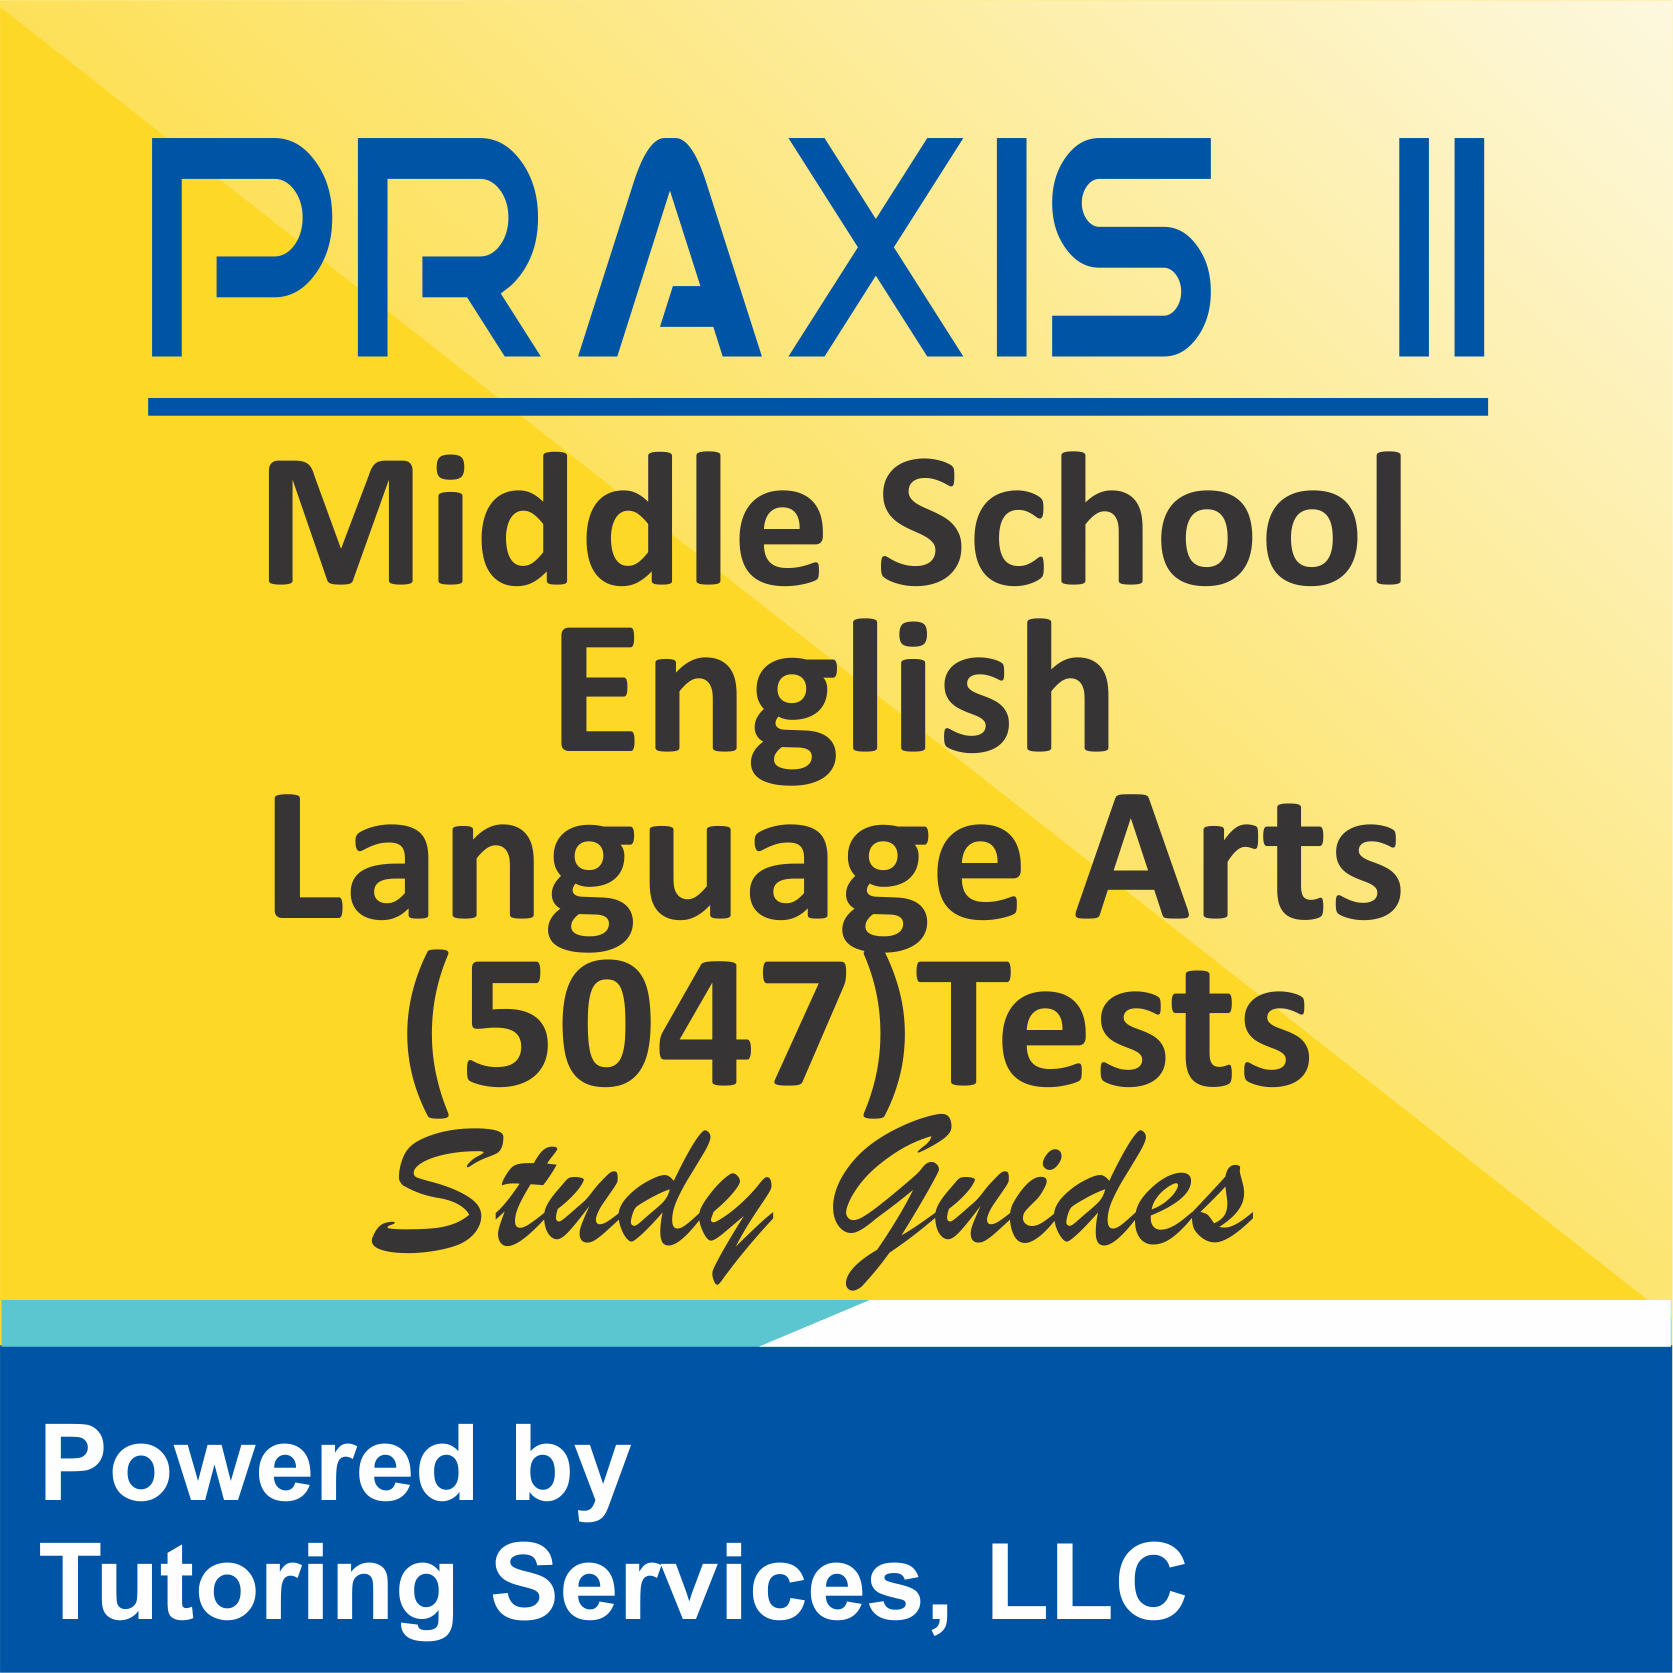 Praxis II Middle School English Language Arts (5047) Examination Ideas